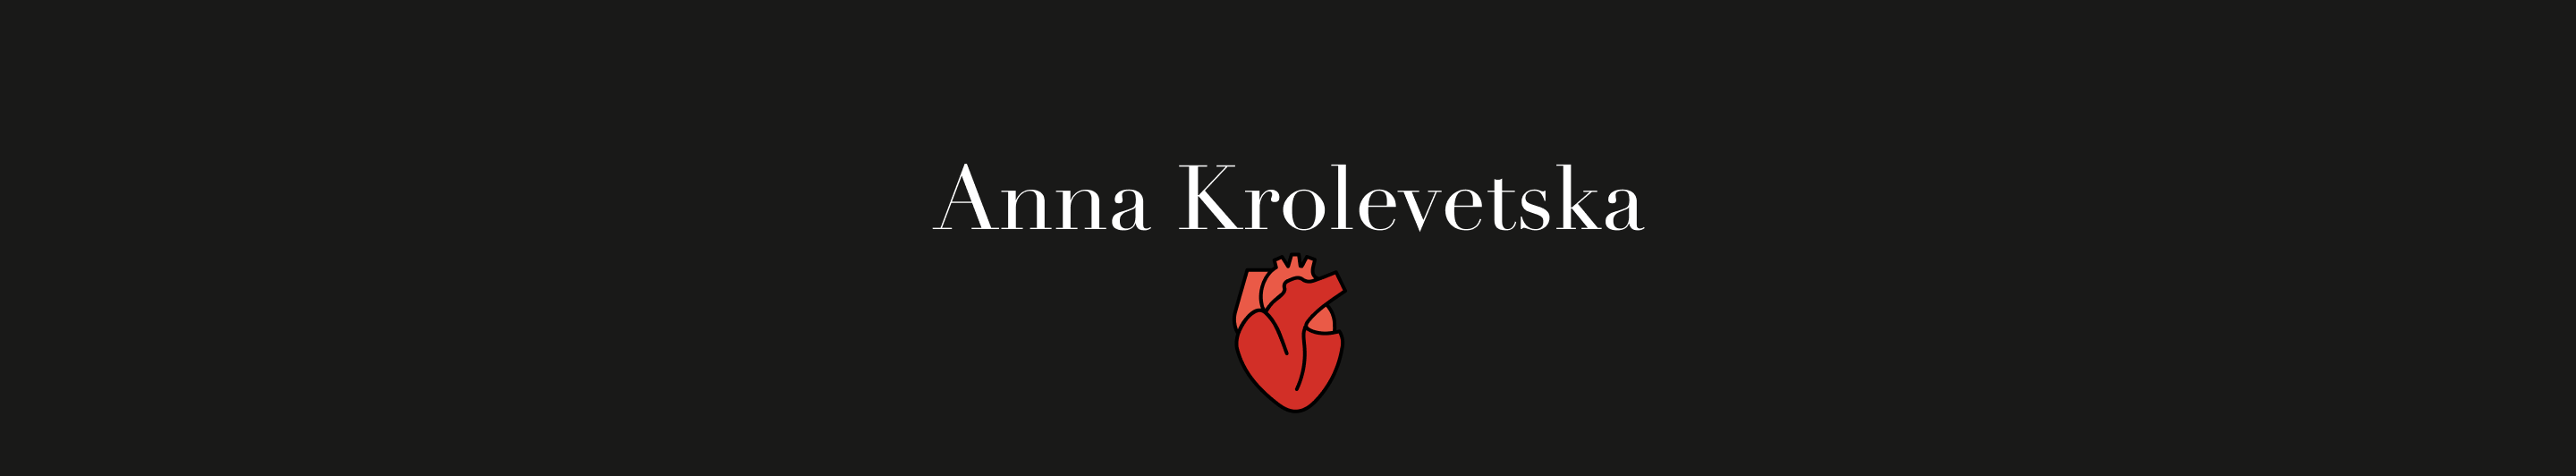 Anna Krolevetska's profile banner